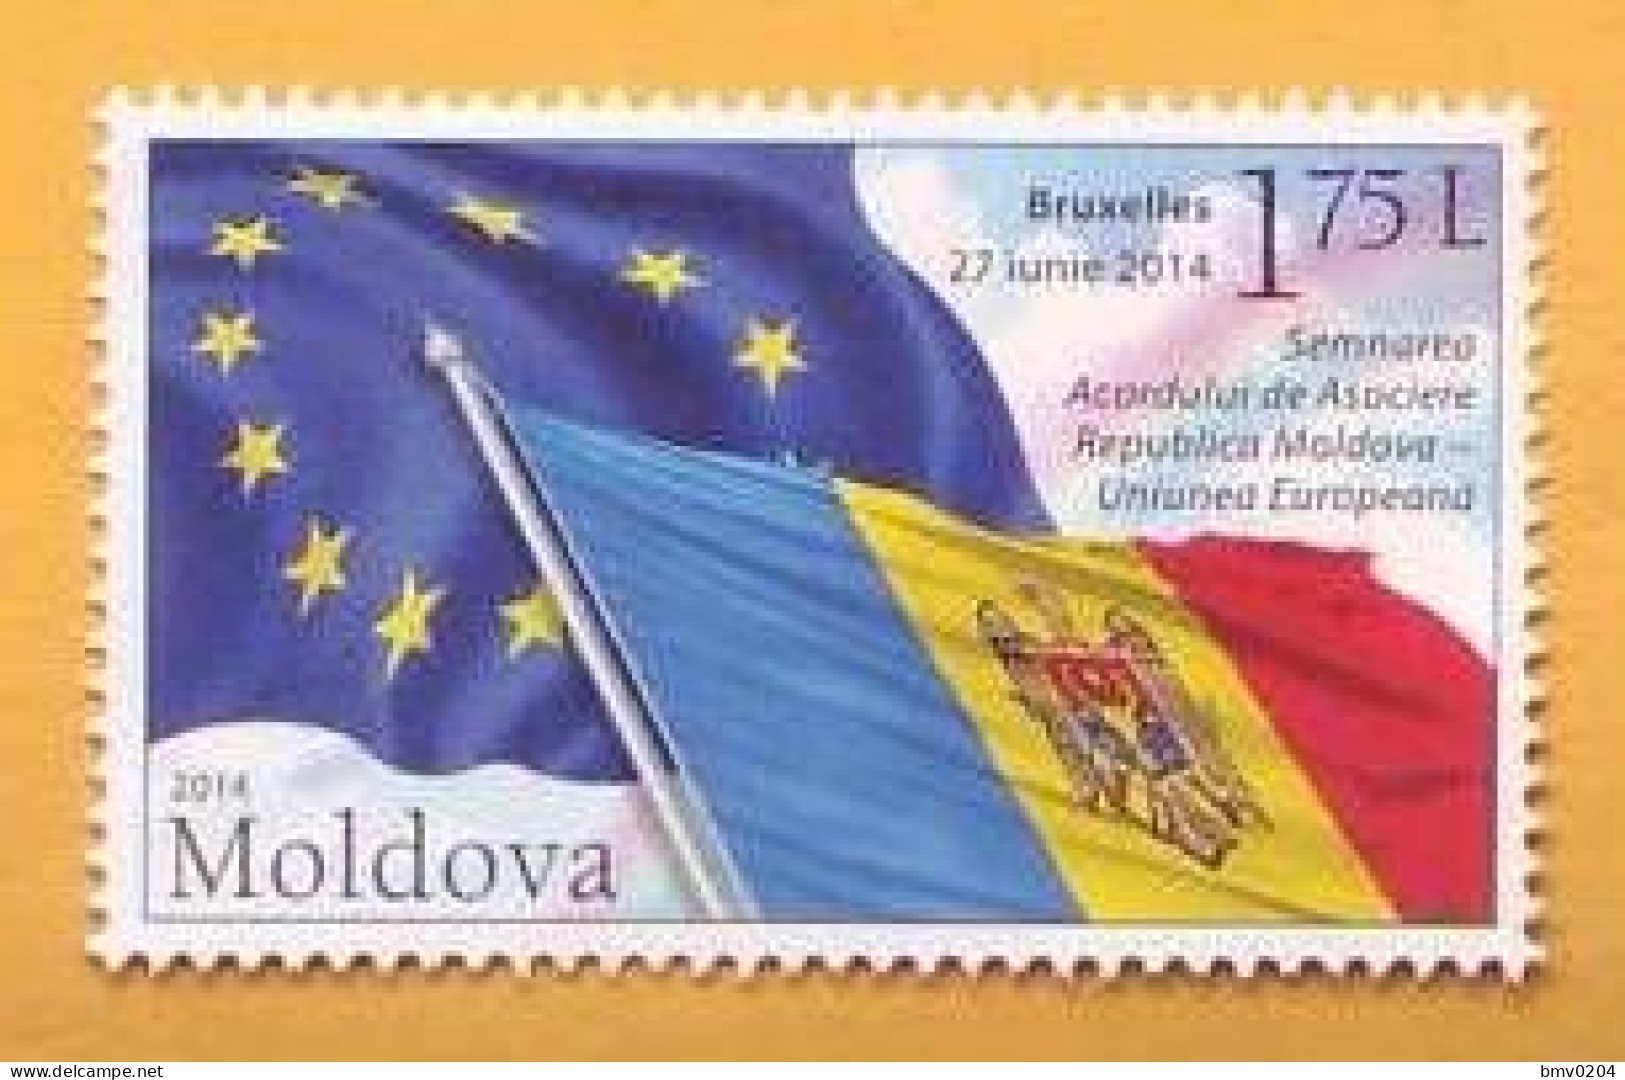 2014 Moldova Moldavie Moldau European Union - Moldova. The Signing Of The Agreement 27 July 2014 Brussels 1v Mint. - Moldavie